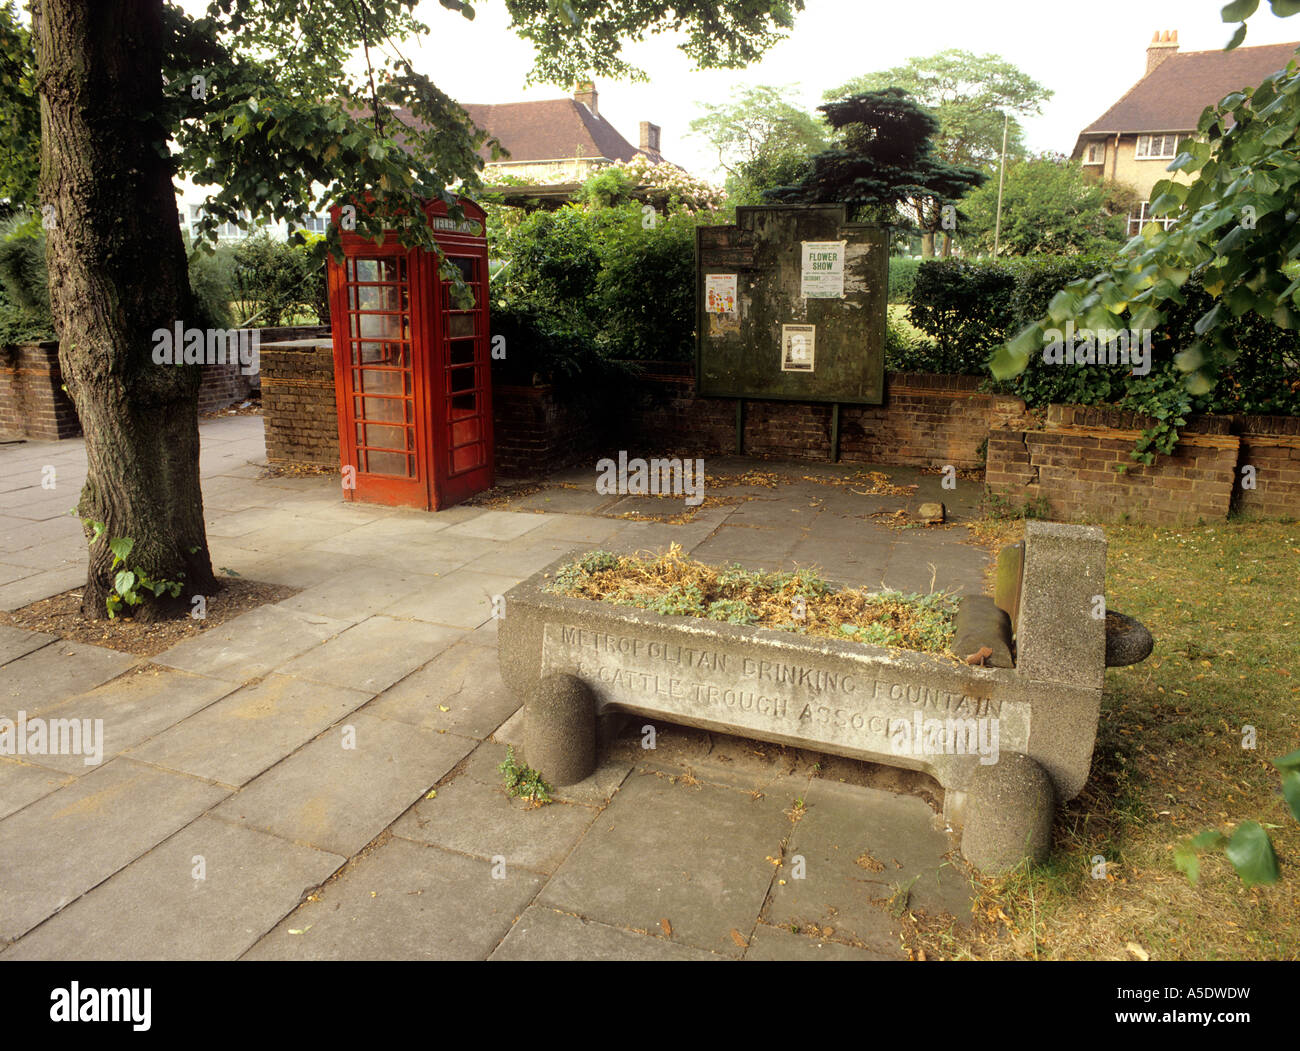 Communications London Golders Green K6 phone box outside public garden near horse trough Stock Photo